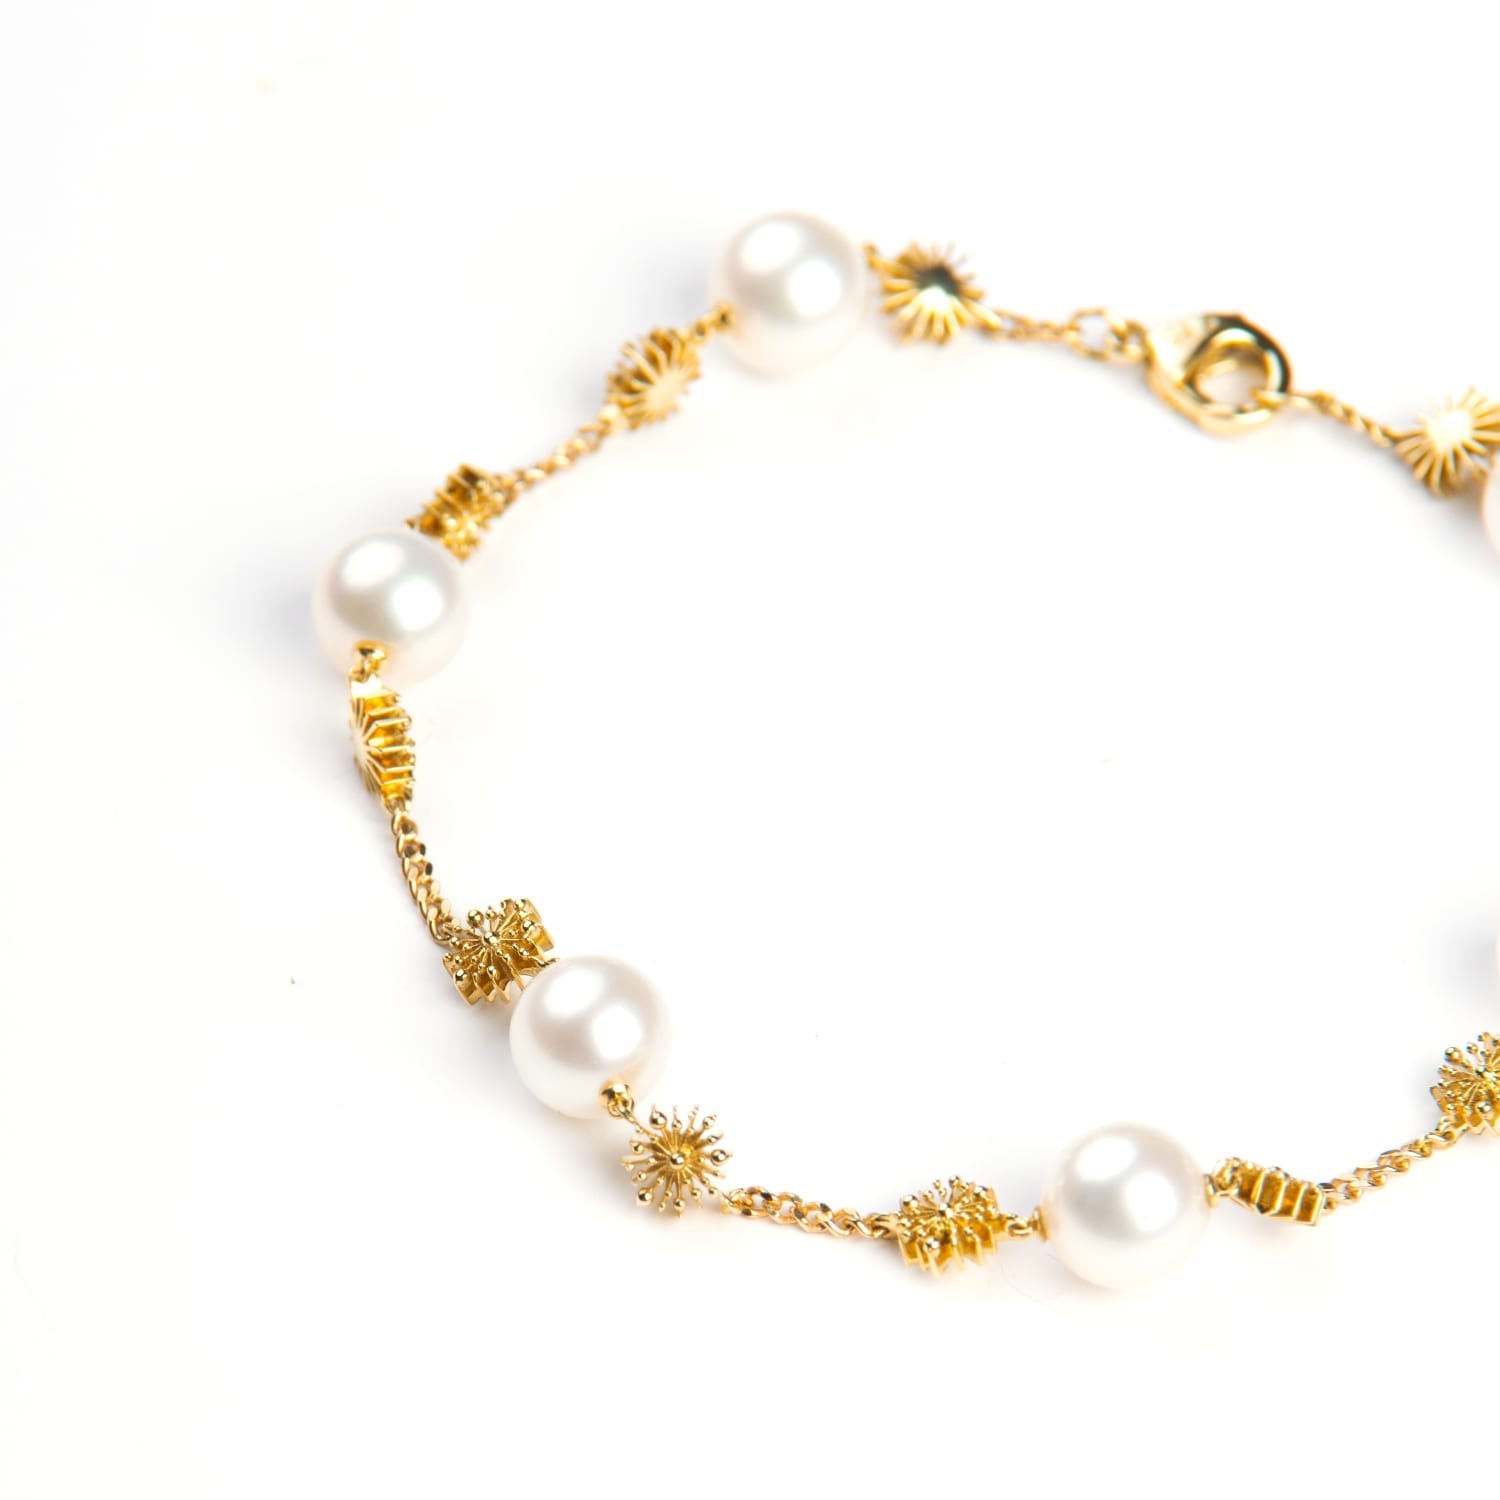 nb_soleil_pearl_yellow_gold_bracelet_side